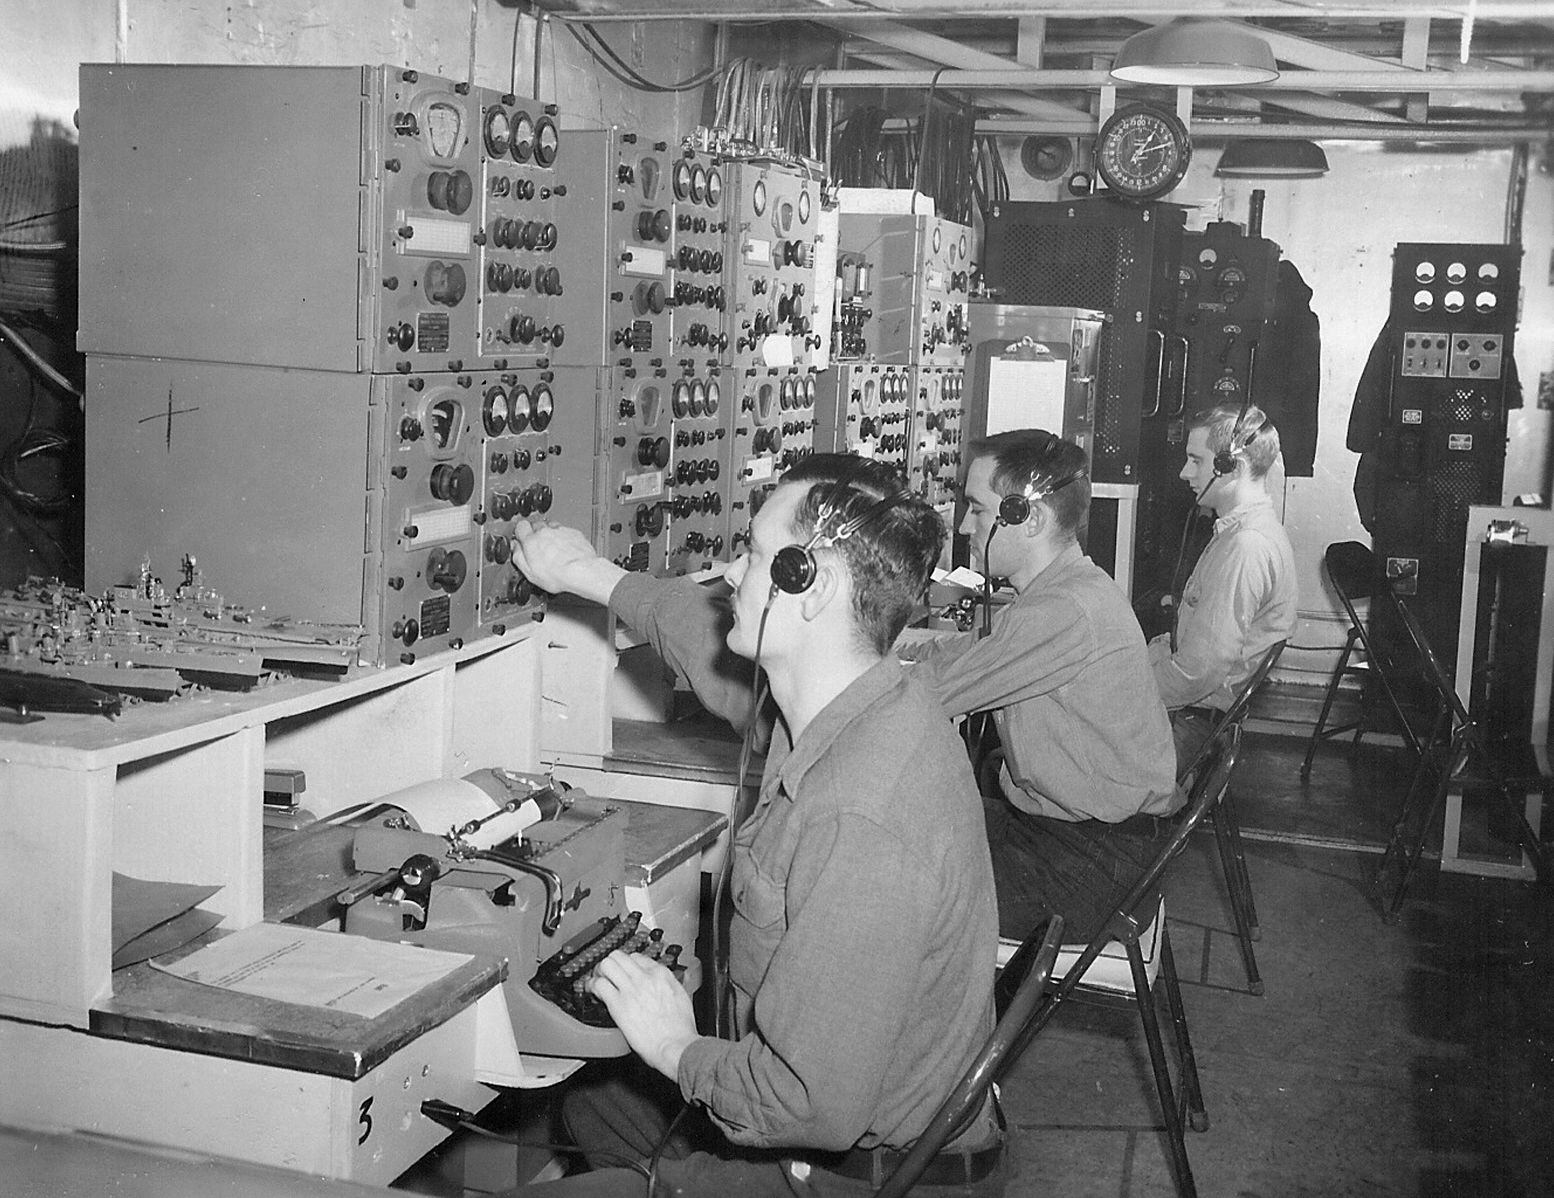 Men sit at radio communications equipment.